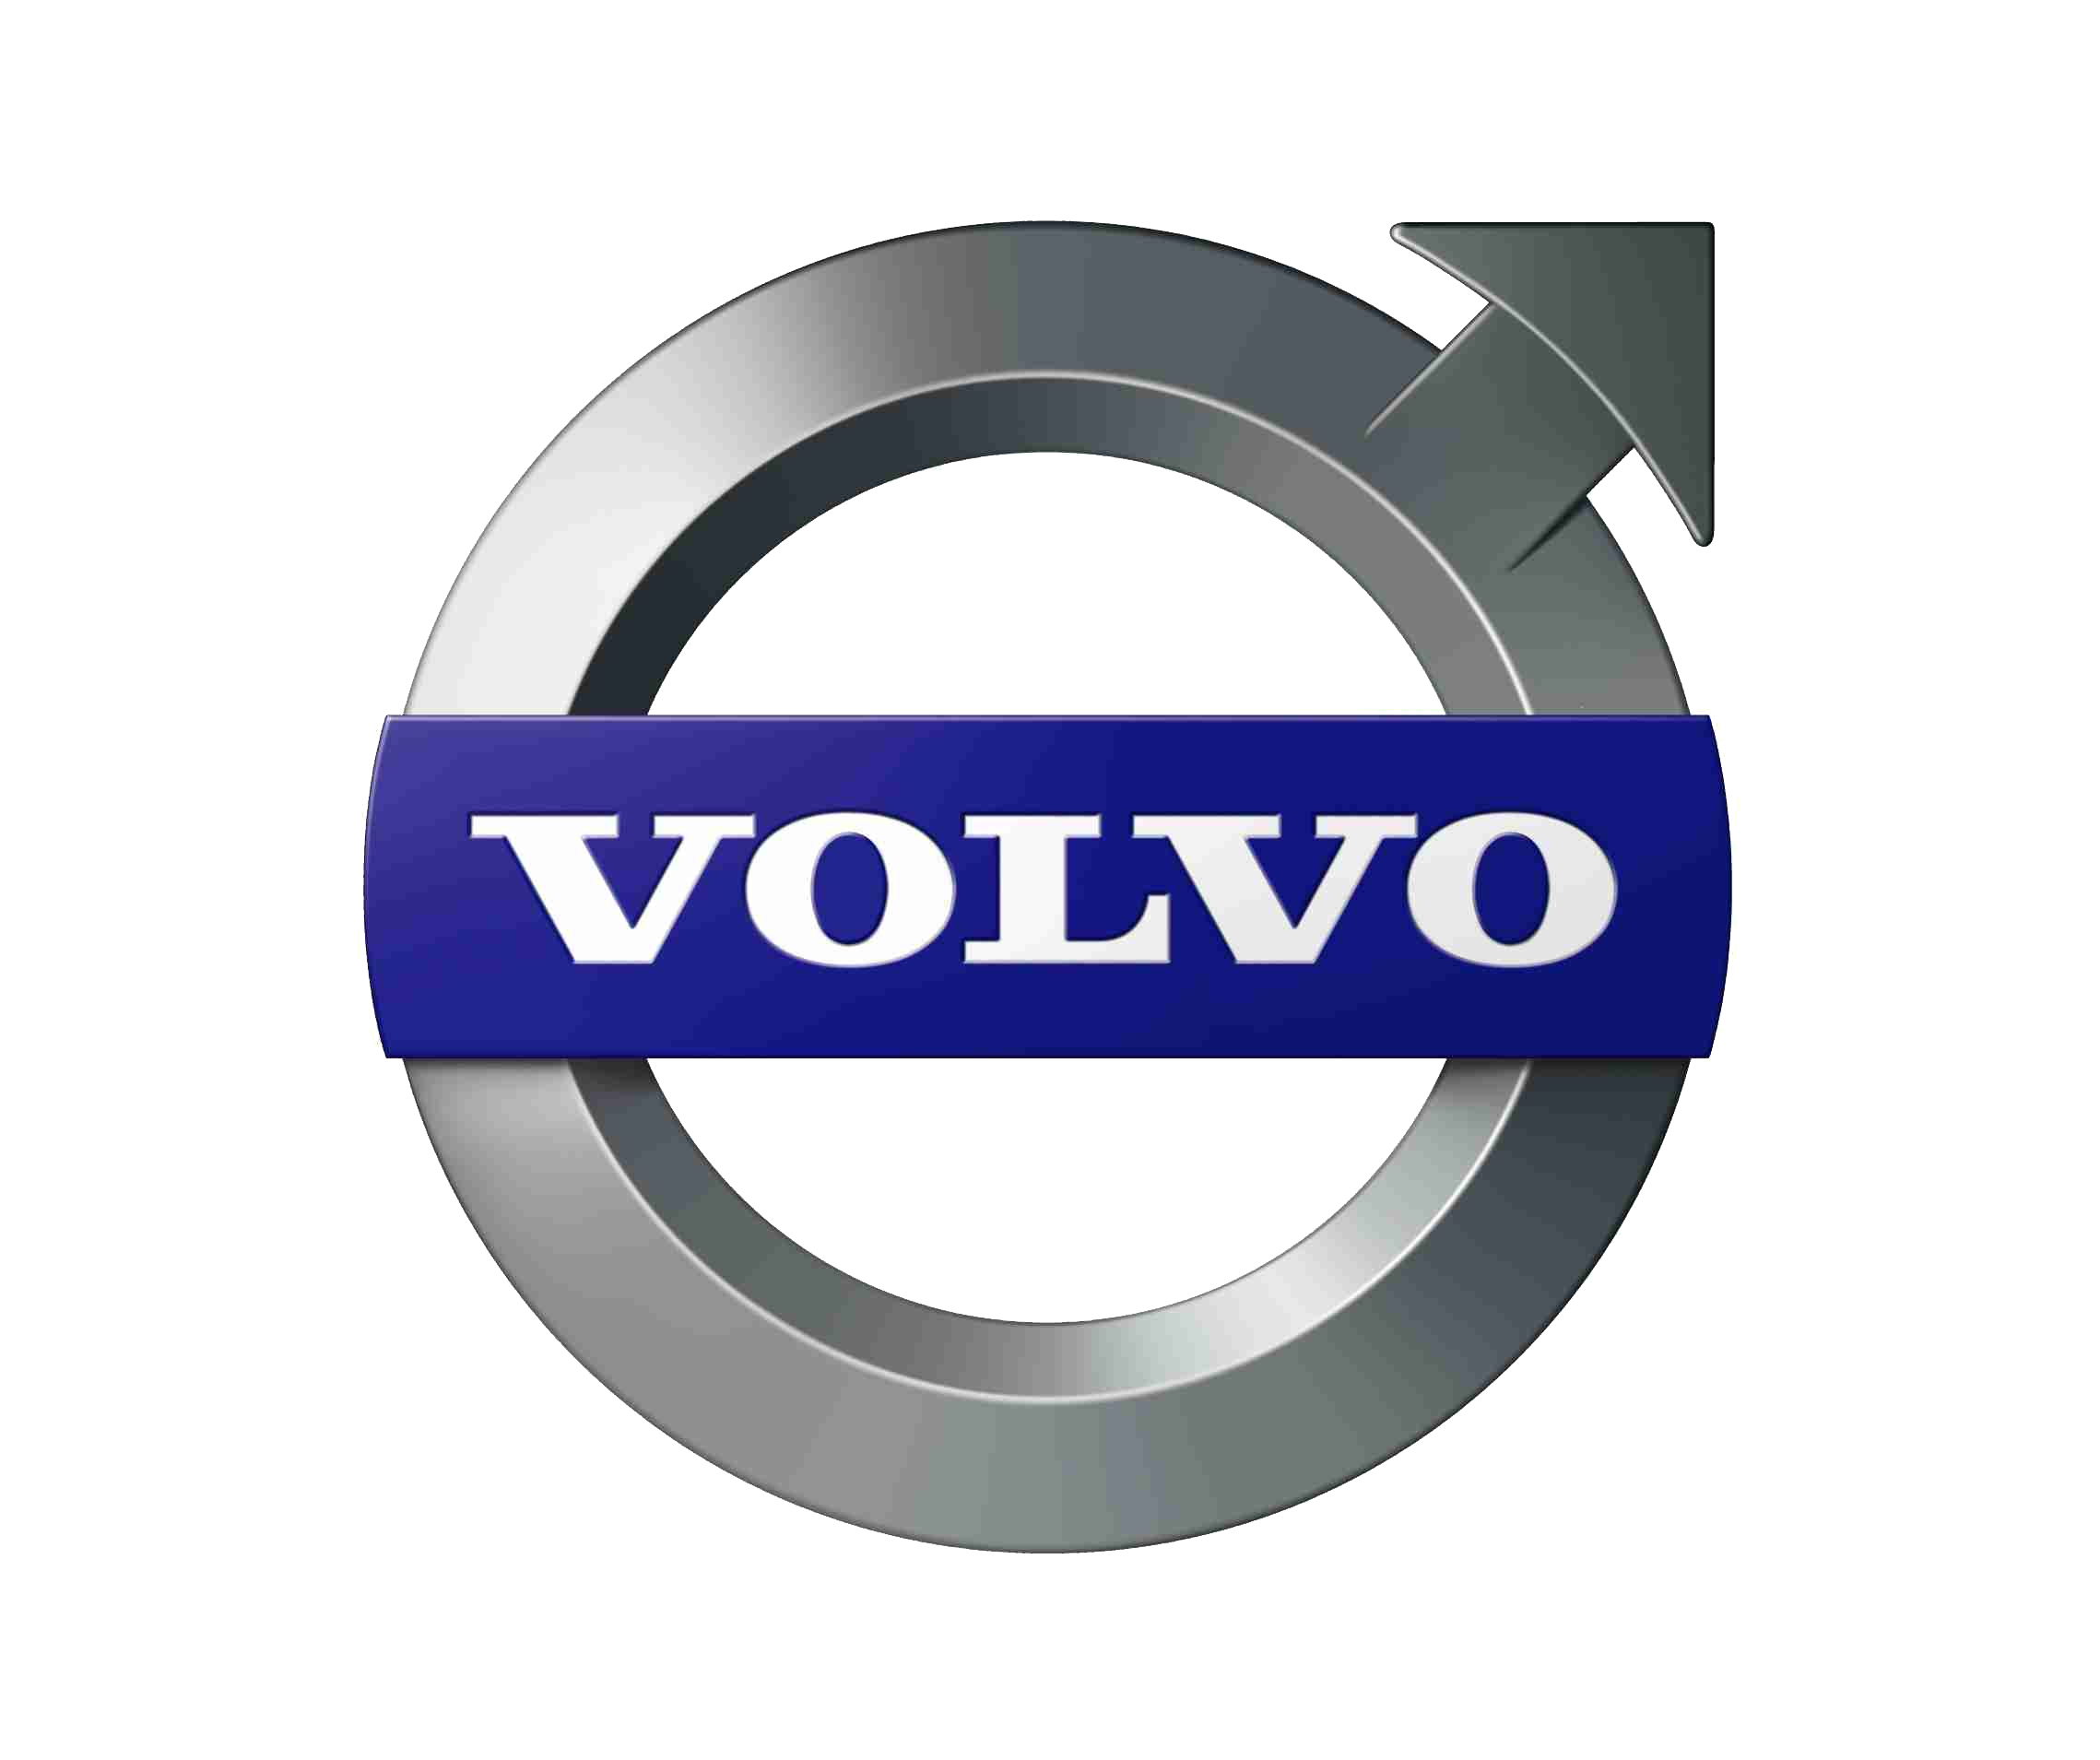 Volvo Xc90 PNG Transparent Im